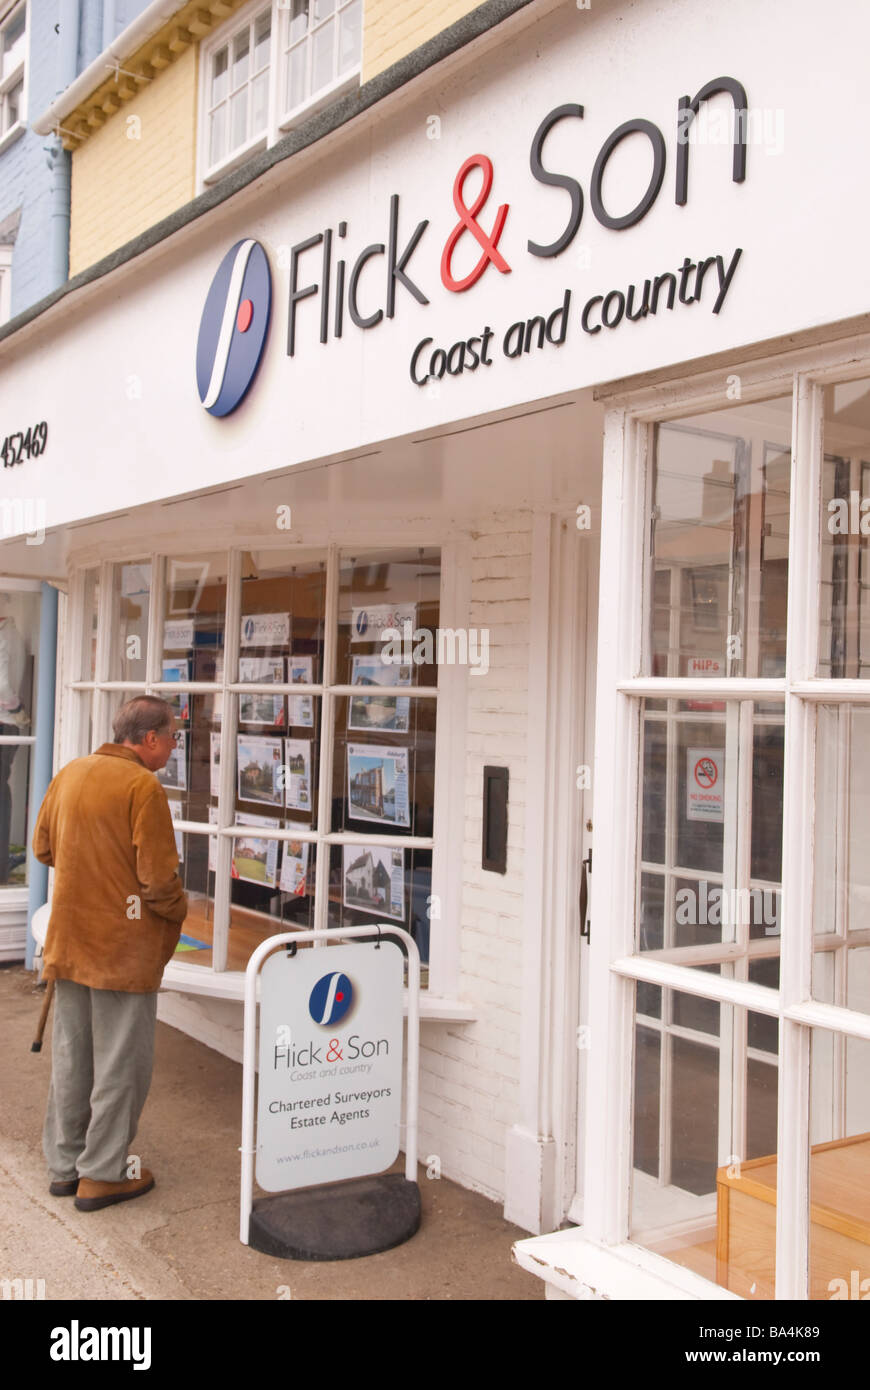 Flick & son estate agents in Aldeburgh,Suffolk,Uk Stock Photo